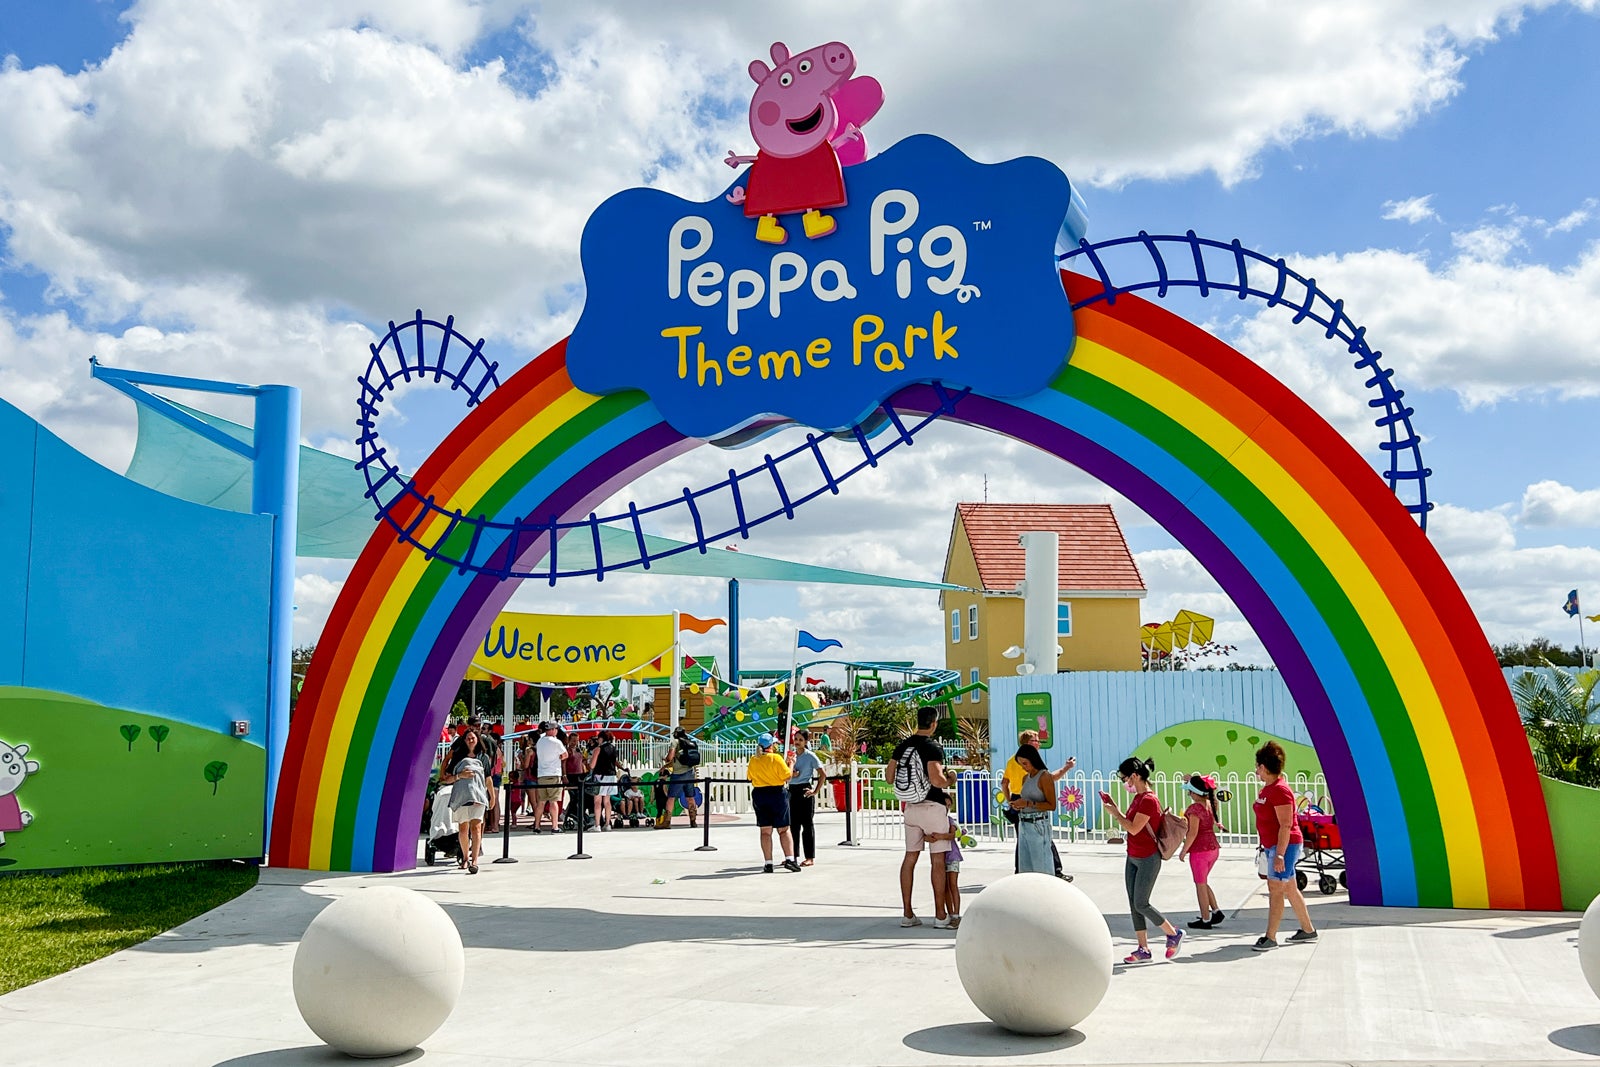 Peppa Pig Theme Park Coming to North Texas – NBC 5 Dallas-Fort Worth